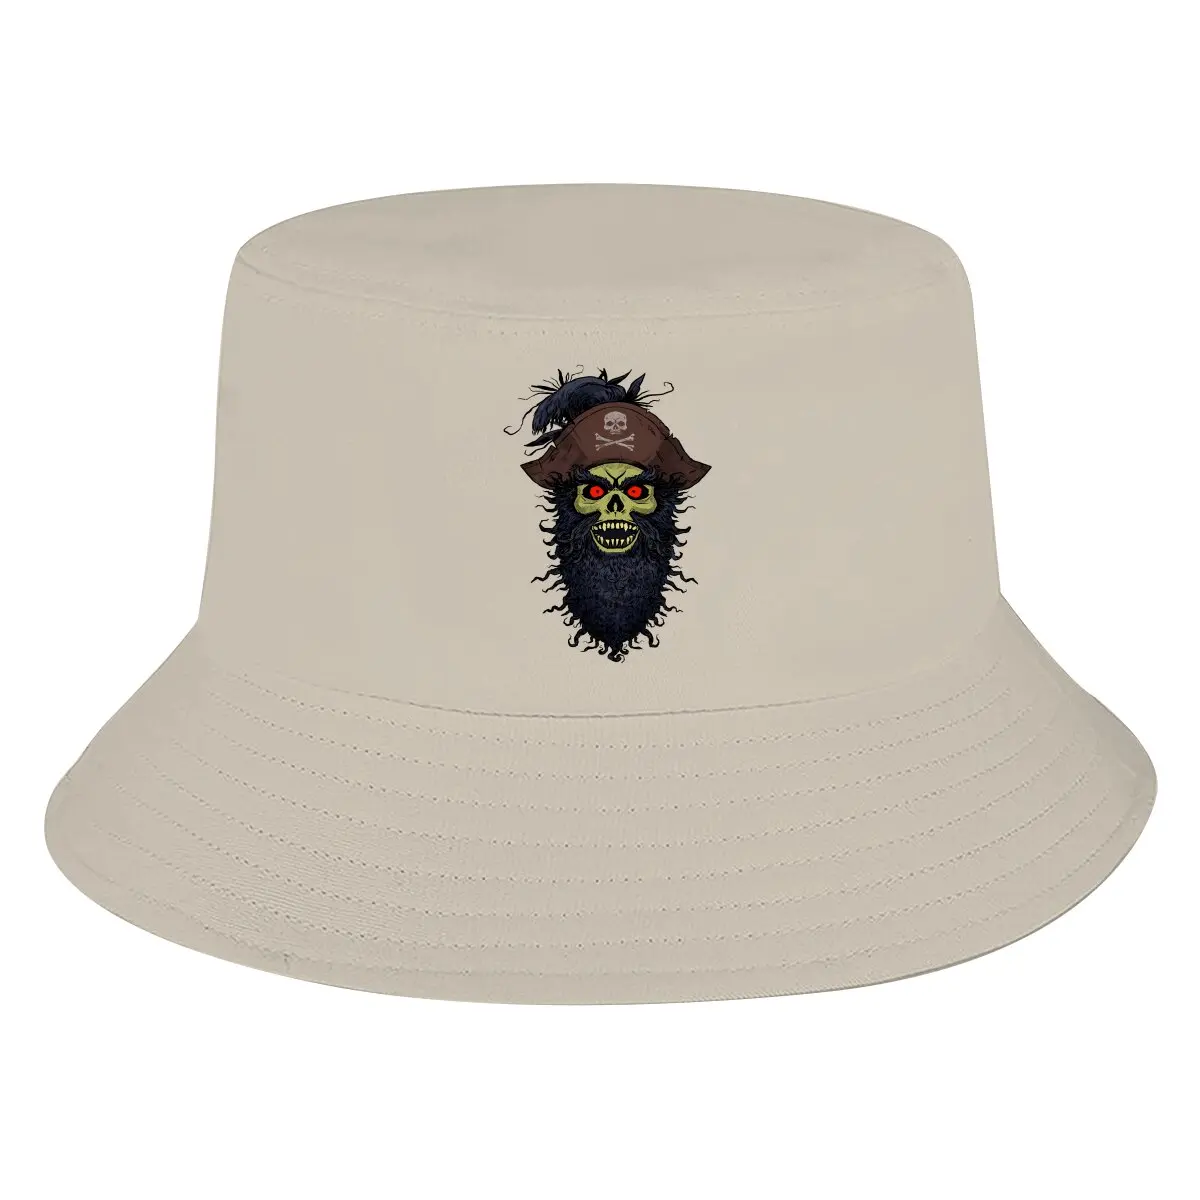 Monkey Island Game Bucket Hat The Dreaded Zombie Pirate LeChuck Men's Women's Fisherman Cap Hip Hop Beach Sun Fishing Hats